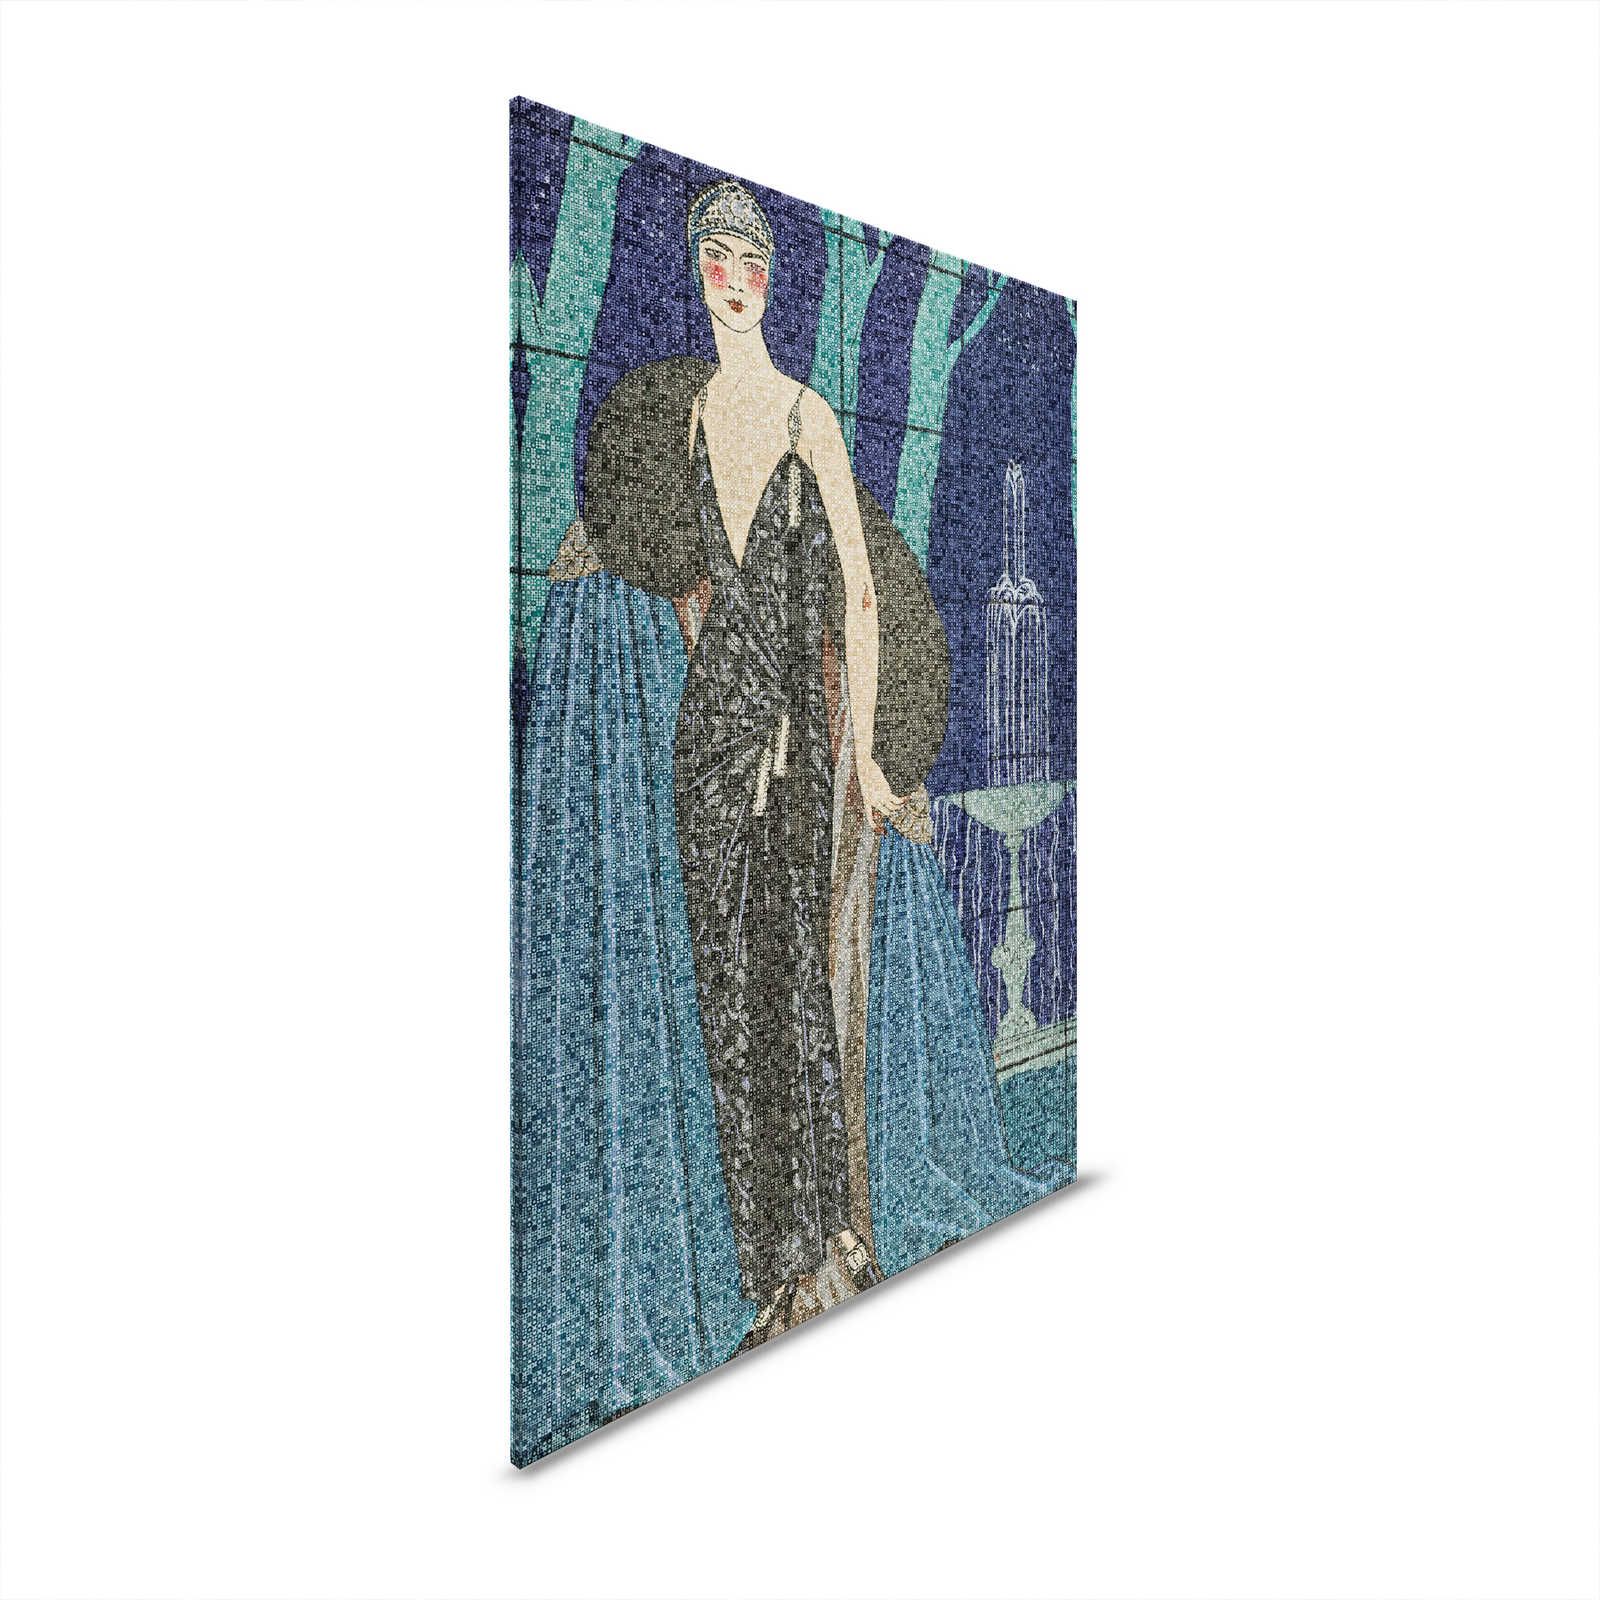 Scala 3 - Art Deco Canvas painting elegant women motif - 0,60 m x 0,90 m
